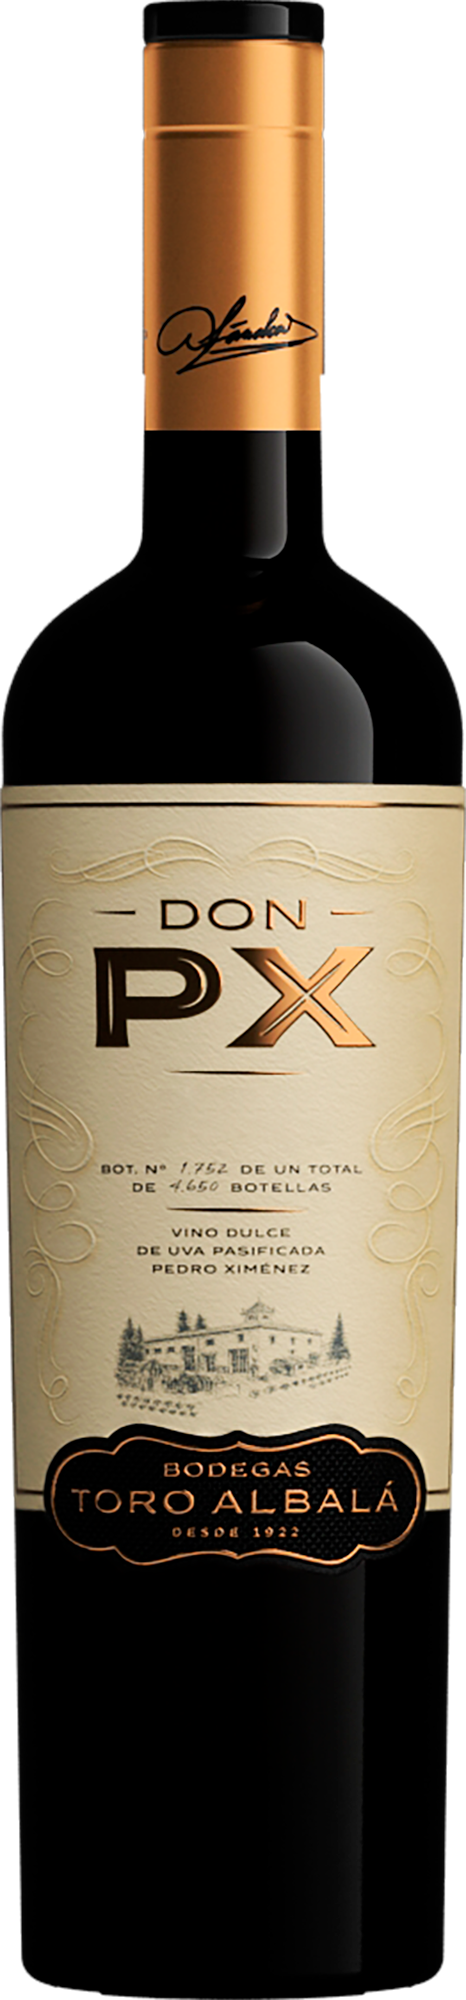 Toro Albalá Don PX 2002 (375ml)